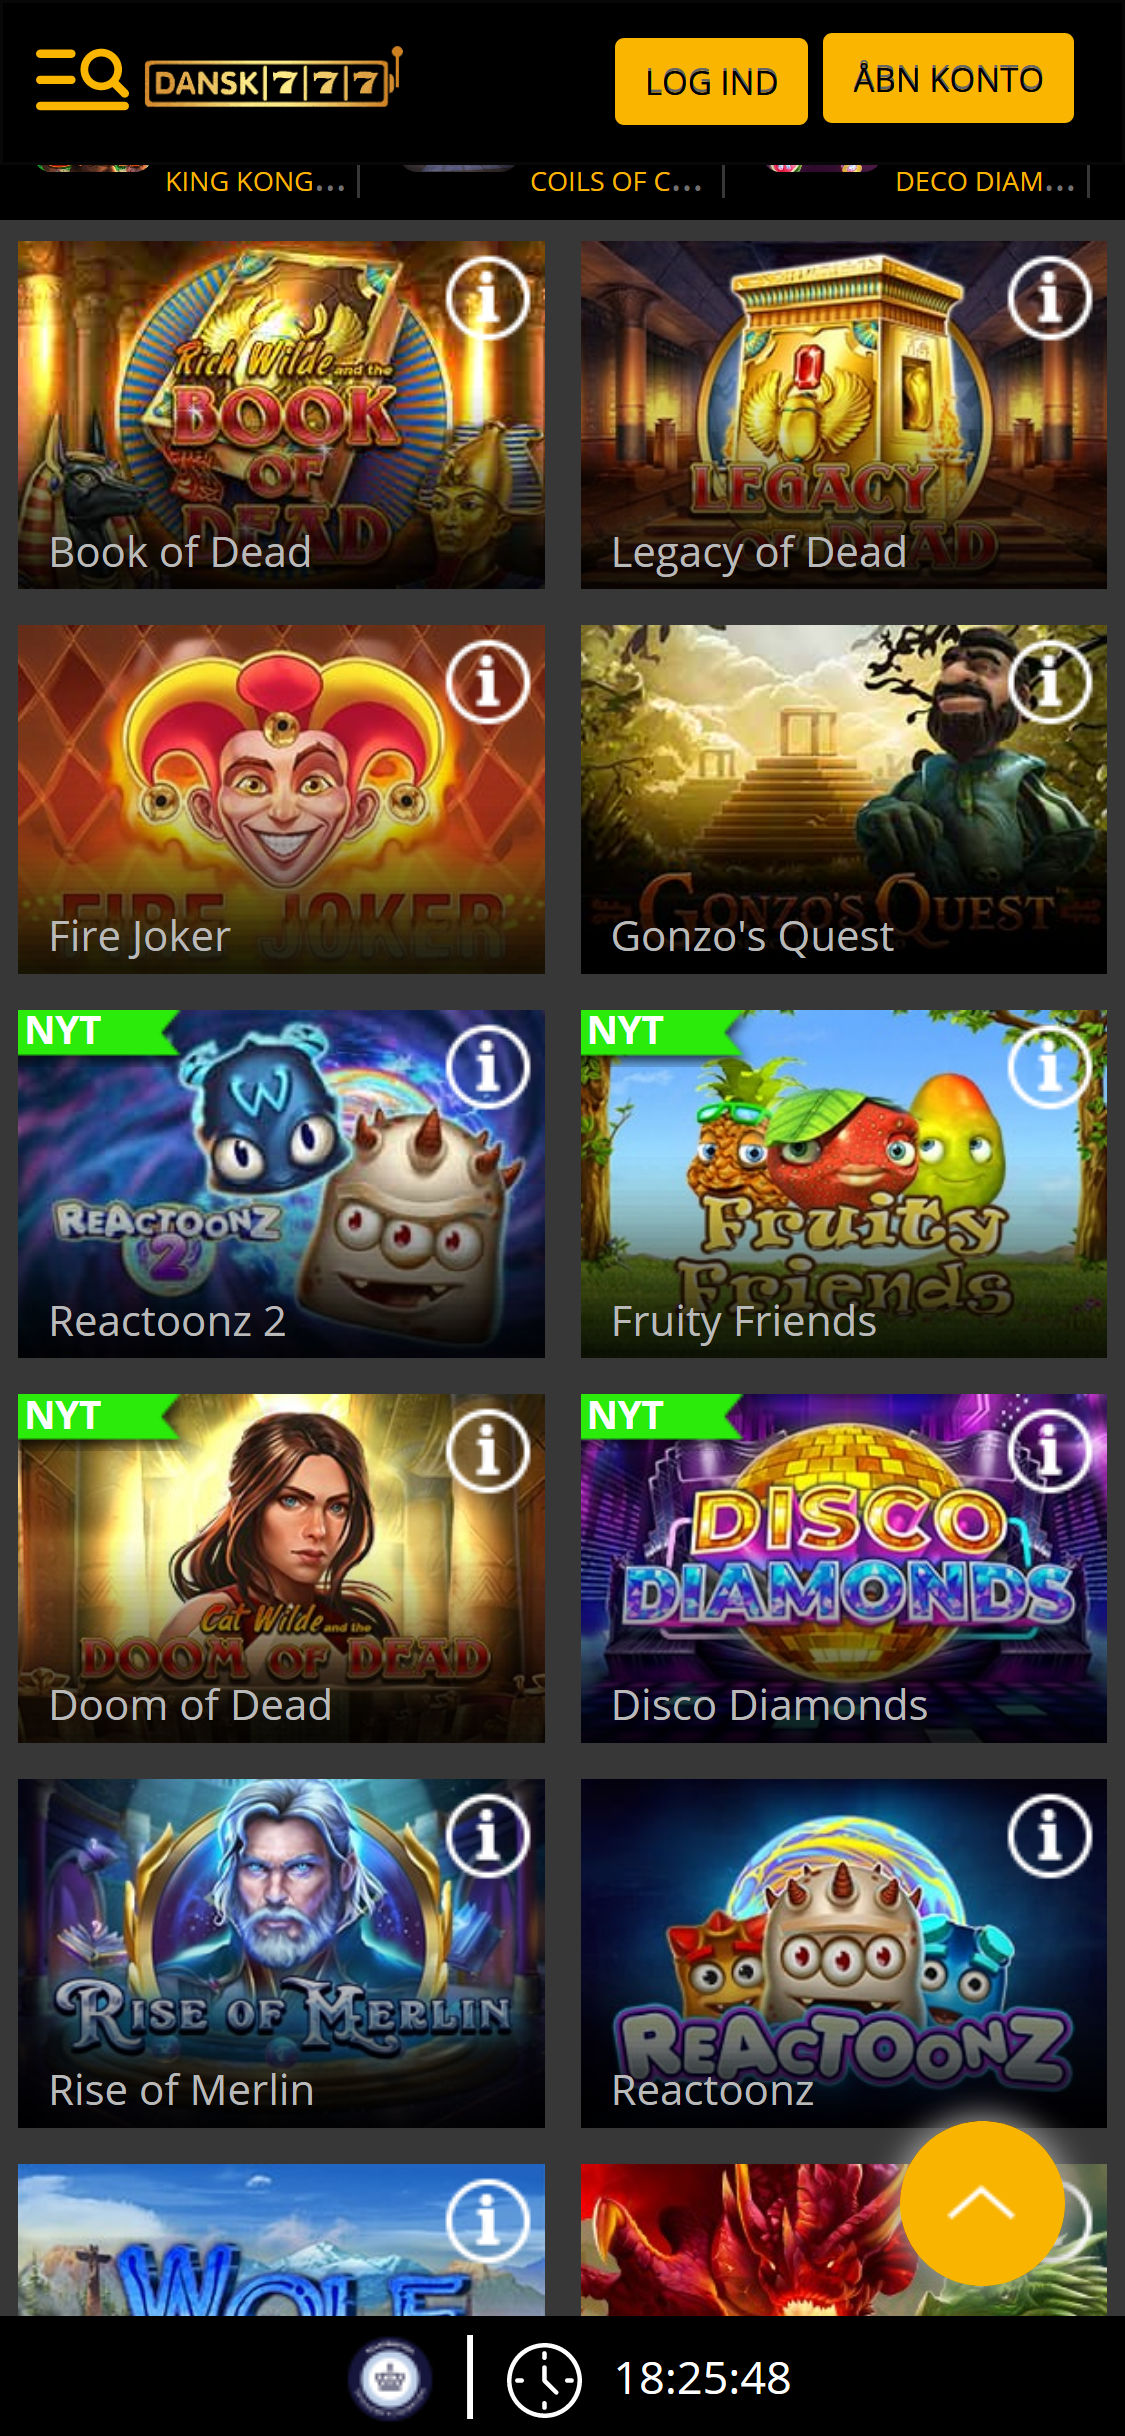 Dansk777 Casino Mobile Games Review